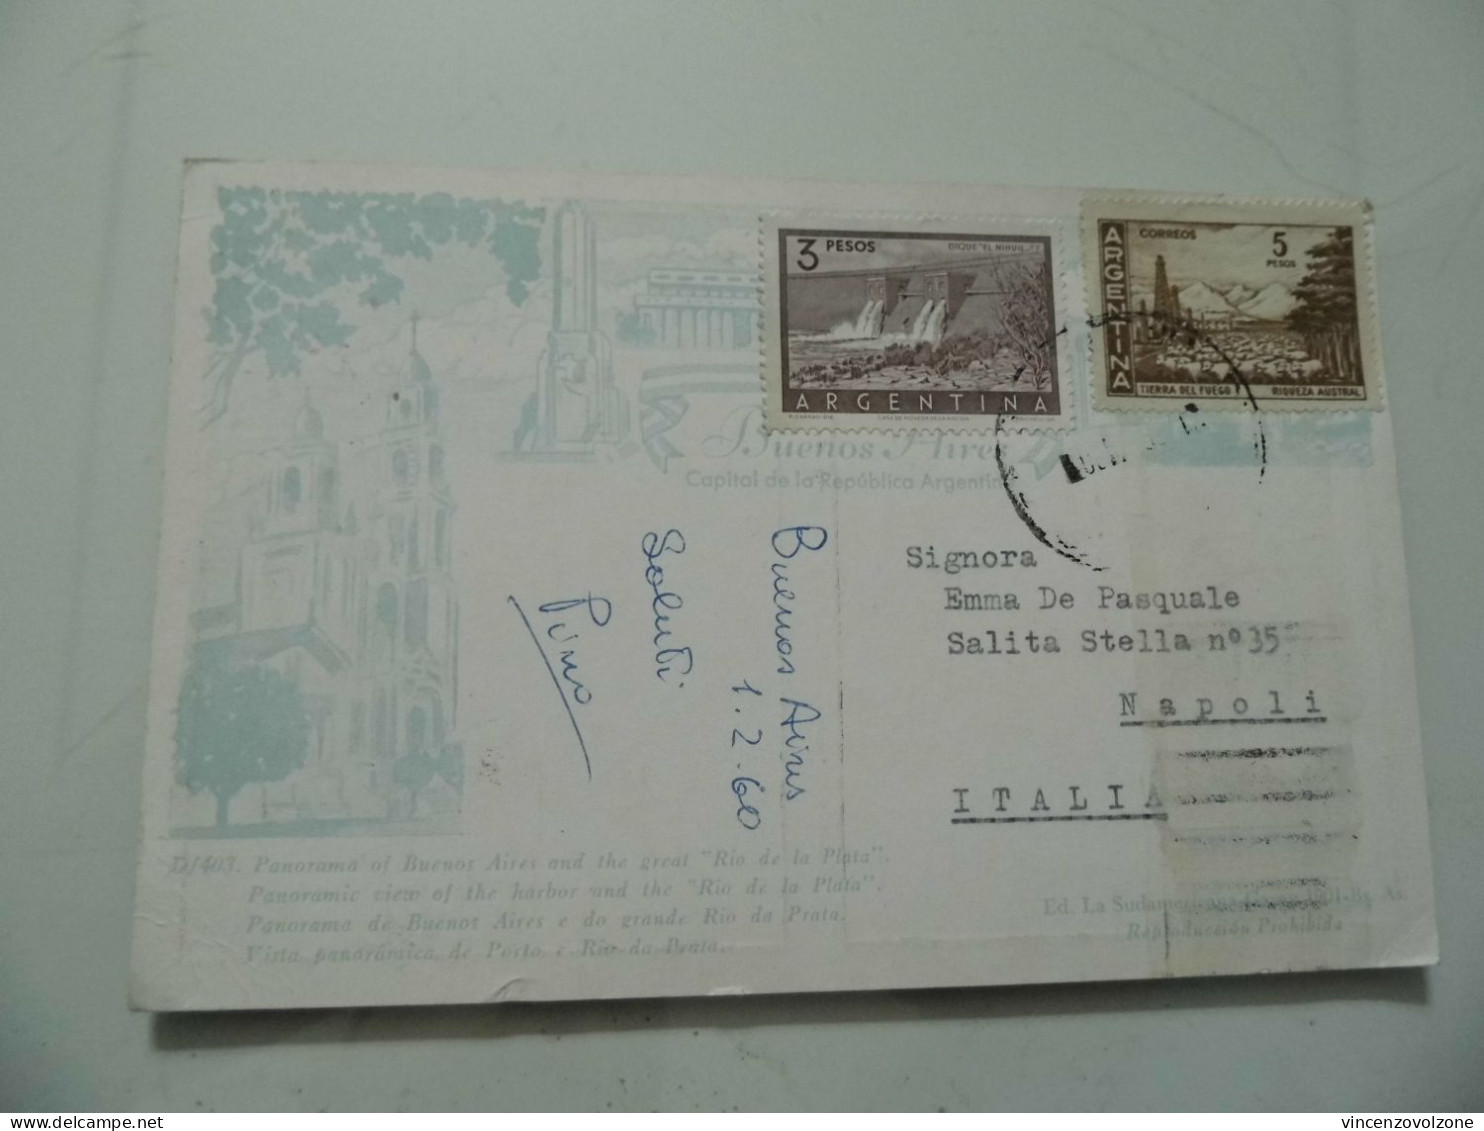 Cartolina Viaggiata "PANORAMA DE BUENOS AIRES"  1958 - Argentine